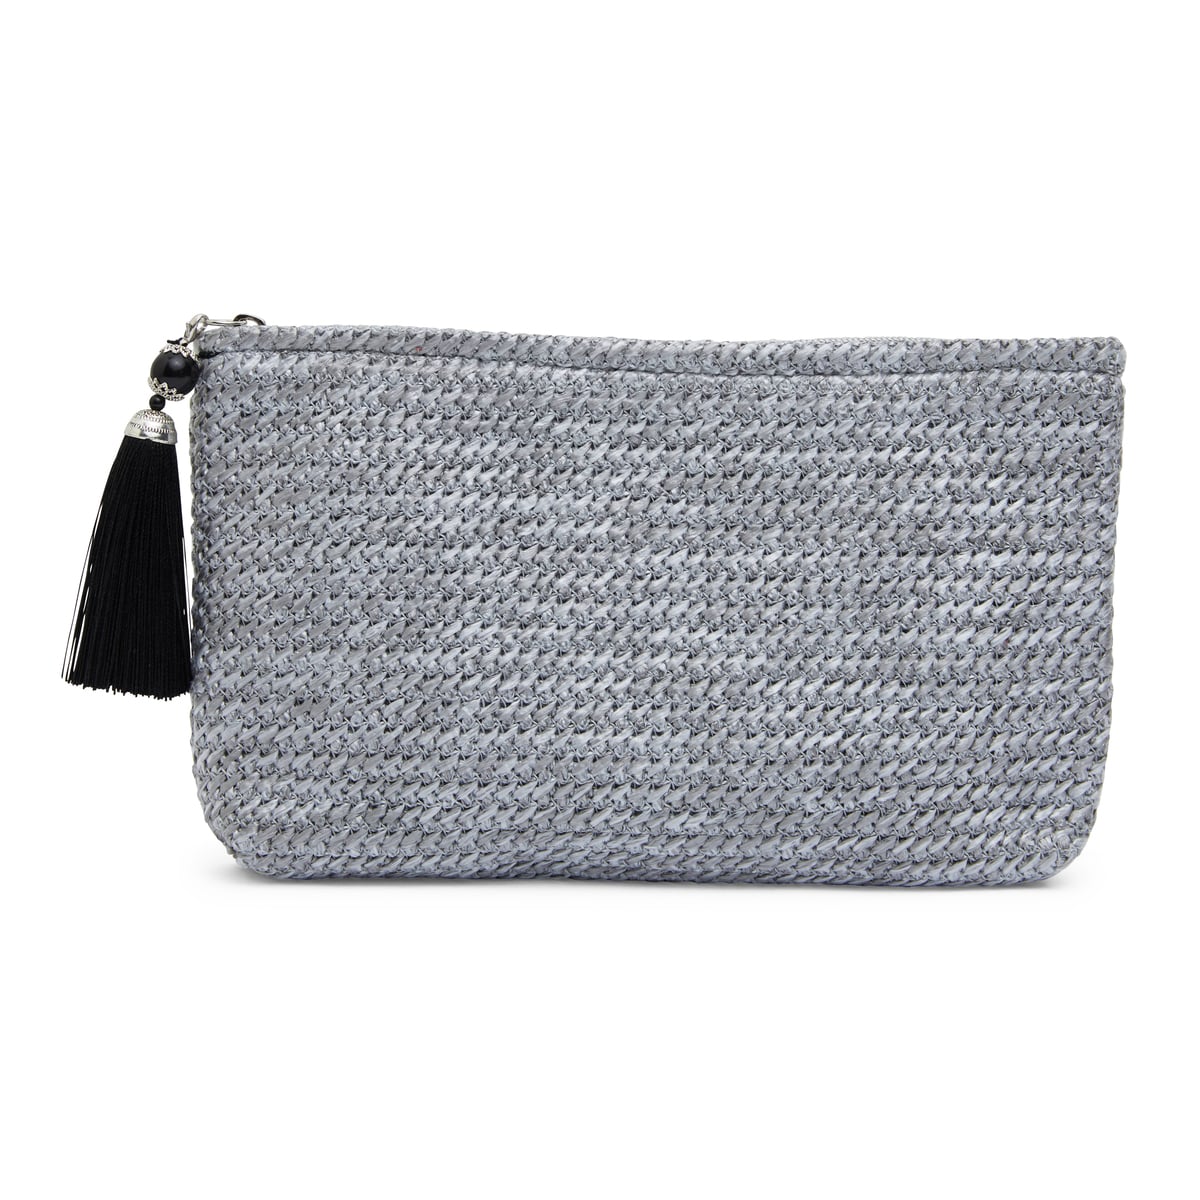 Weave Handbag in Grey